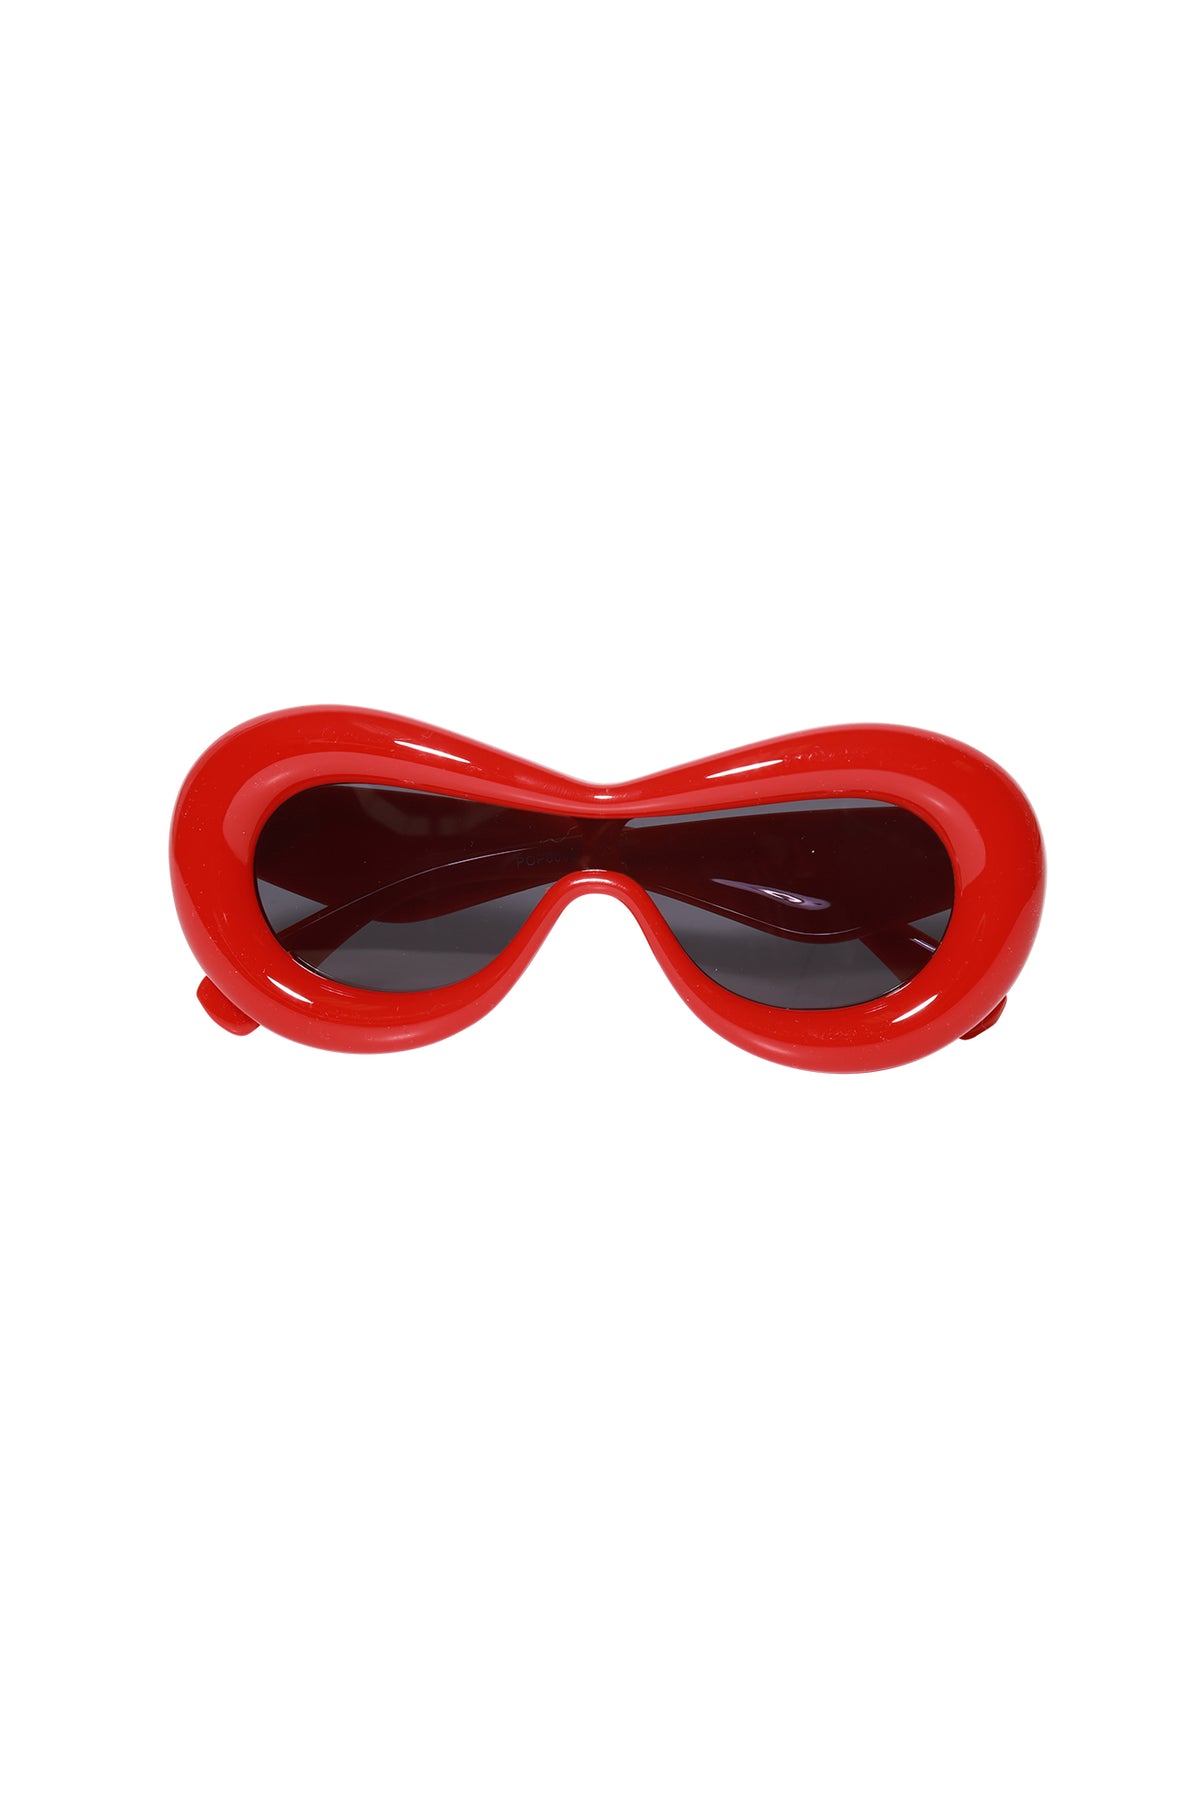 
              Look Alike Retro Framed Sunglasses - Red - Swank A Posh
            